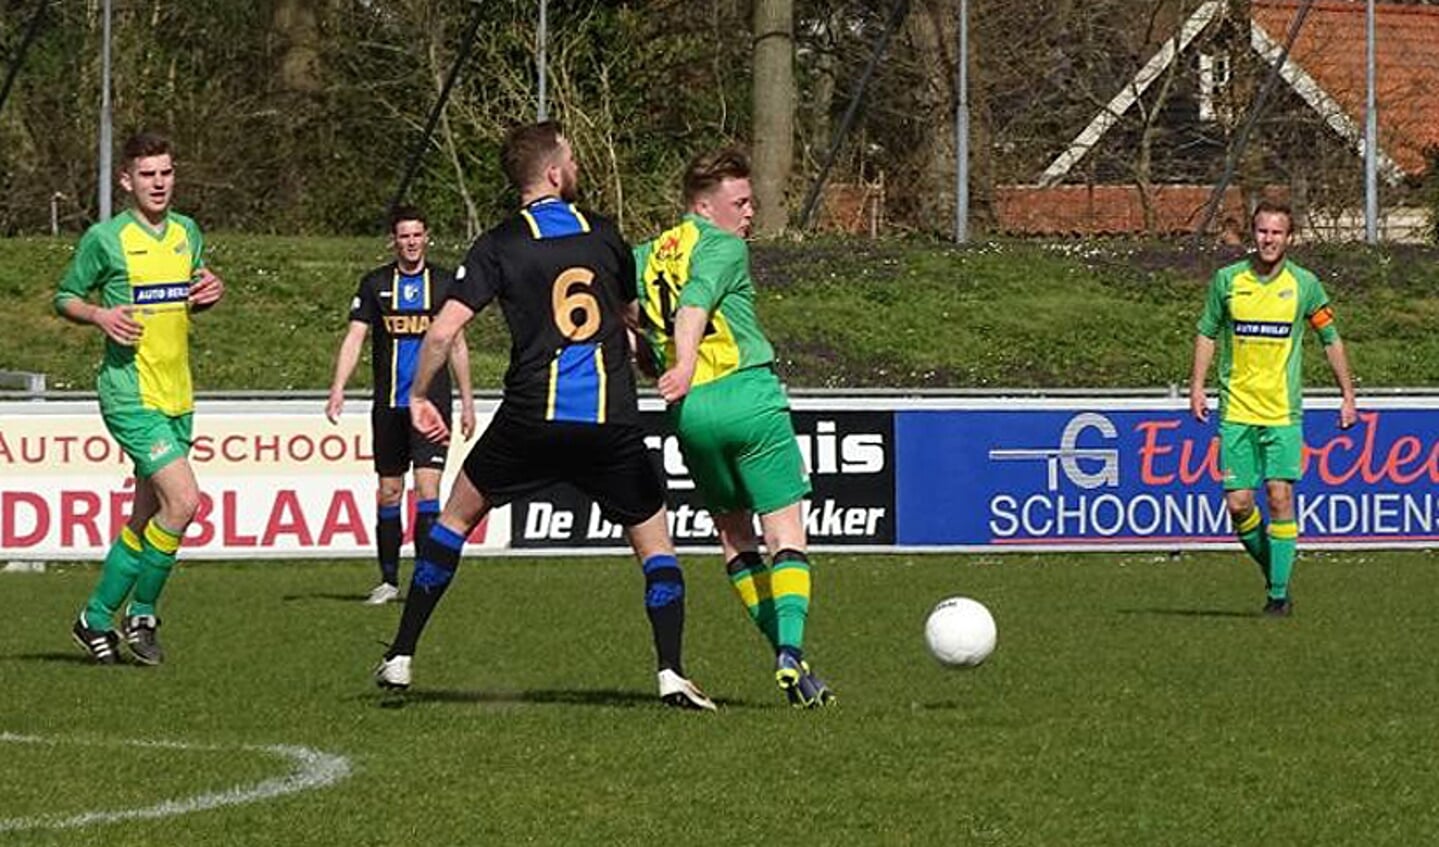 FIT Boys speelt de bal rond op het middenveld (foto Ria de Vries).